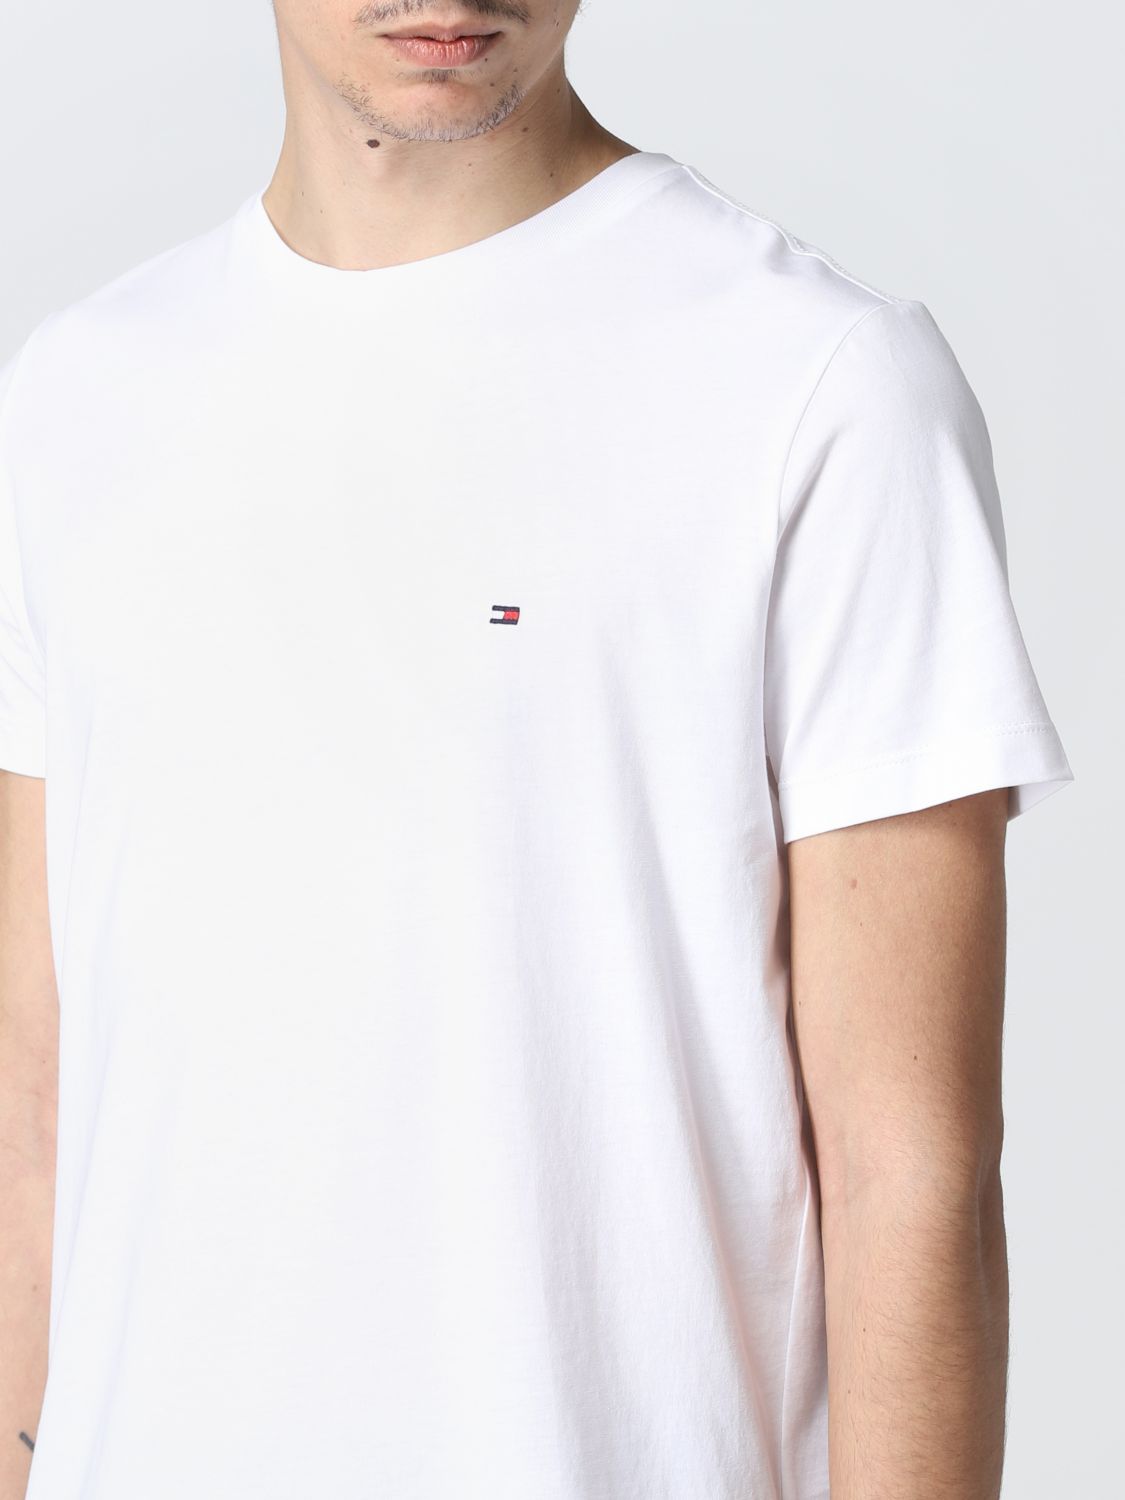 Outlet de Tommy Hilfiger: Camiseta hombre, Blanco Camiseta Tommy Hilfiger en en GIGLIO.COM